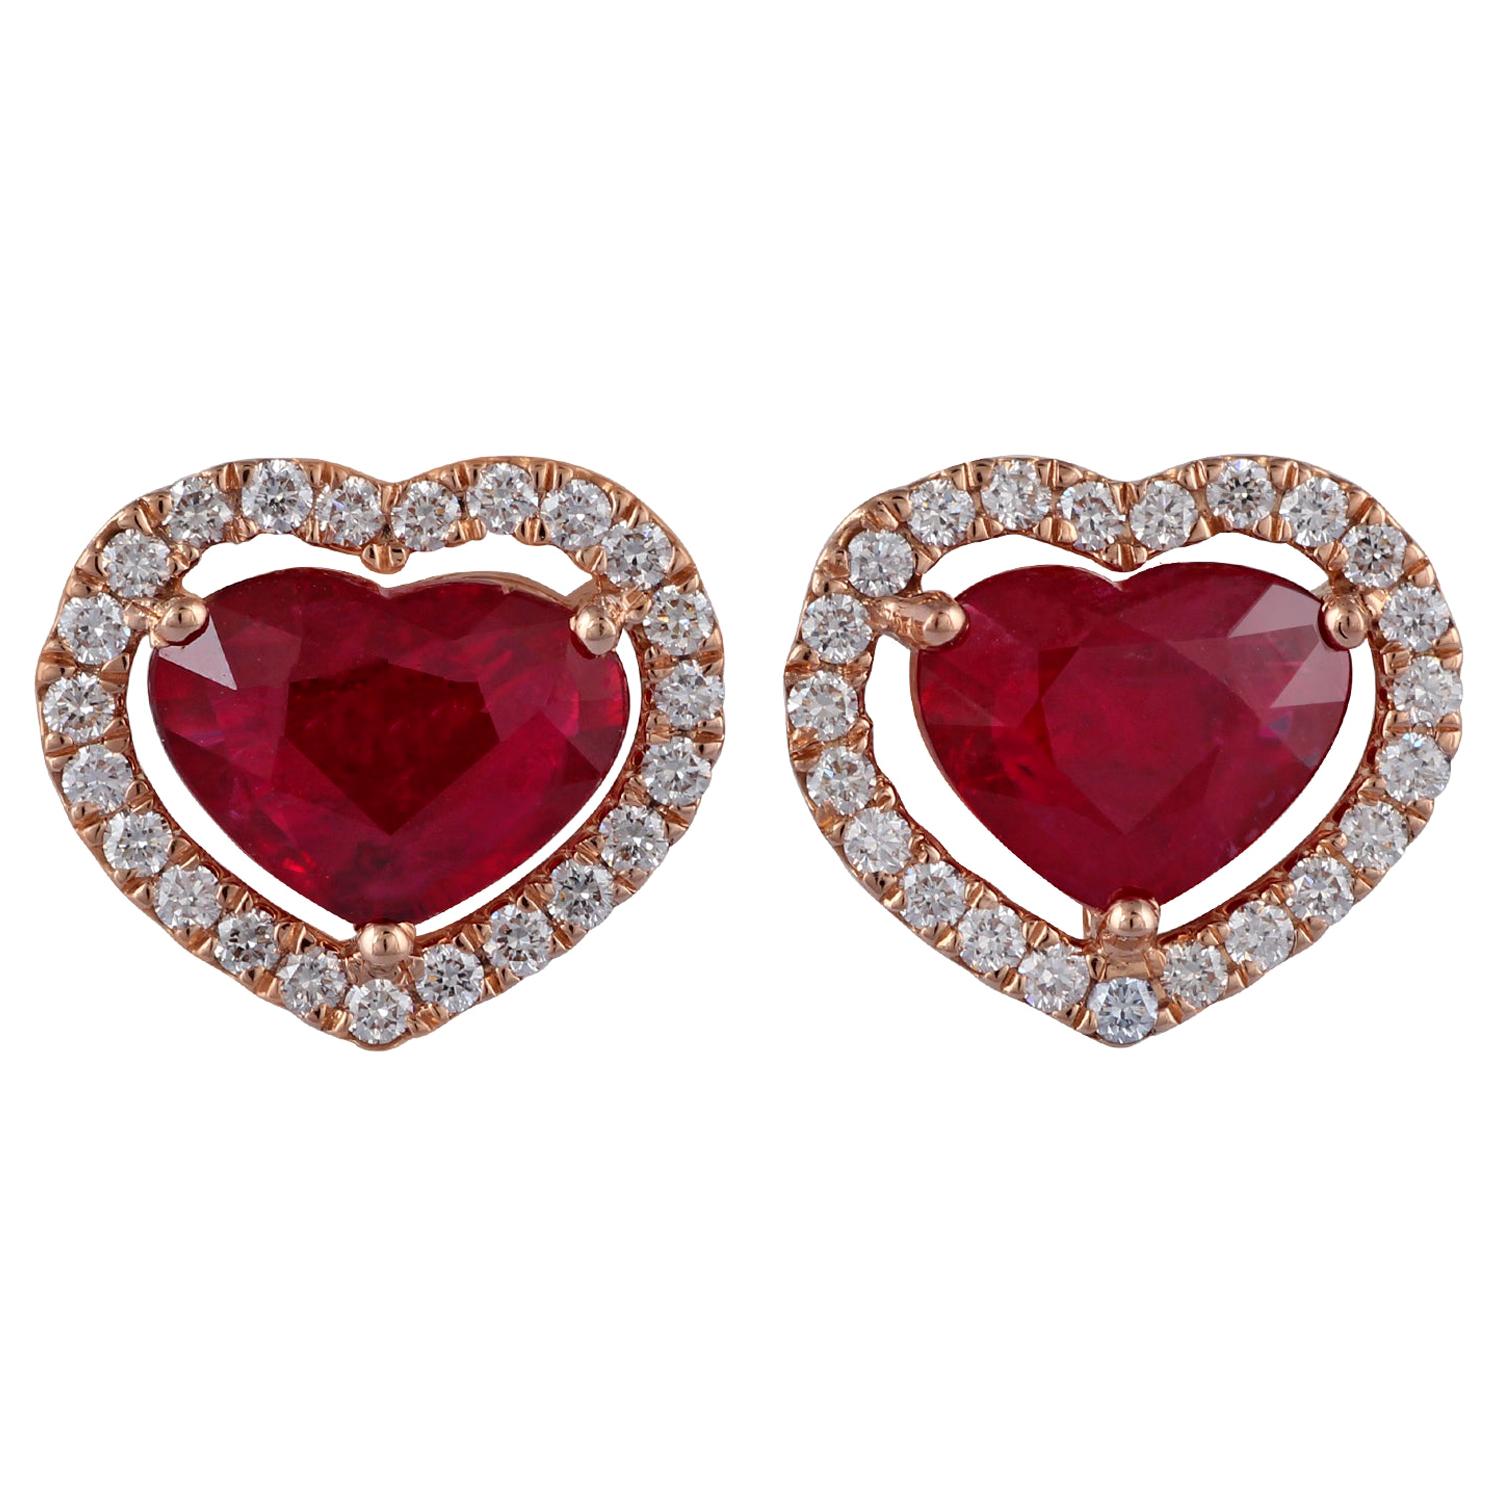 Heart Shaped Ruby Diamond Earring Studded in 18 Karat Rose Gold